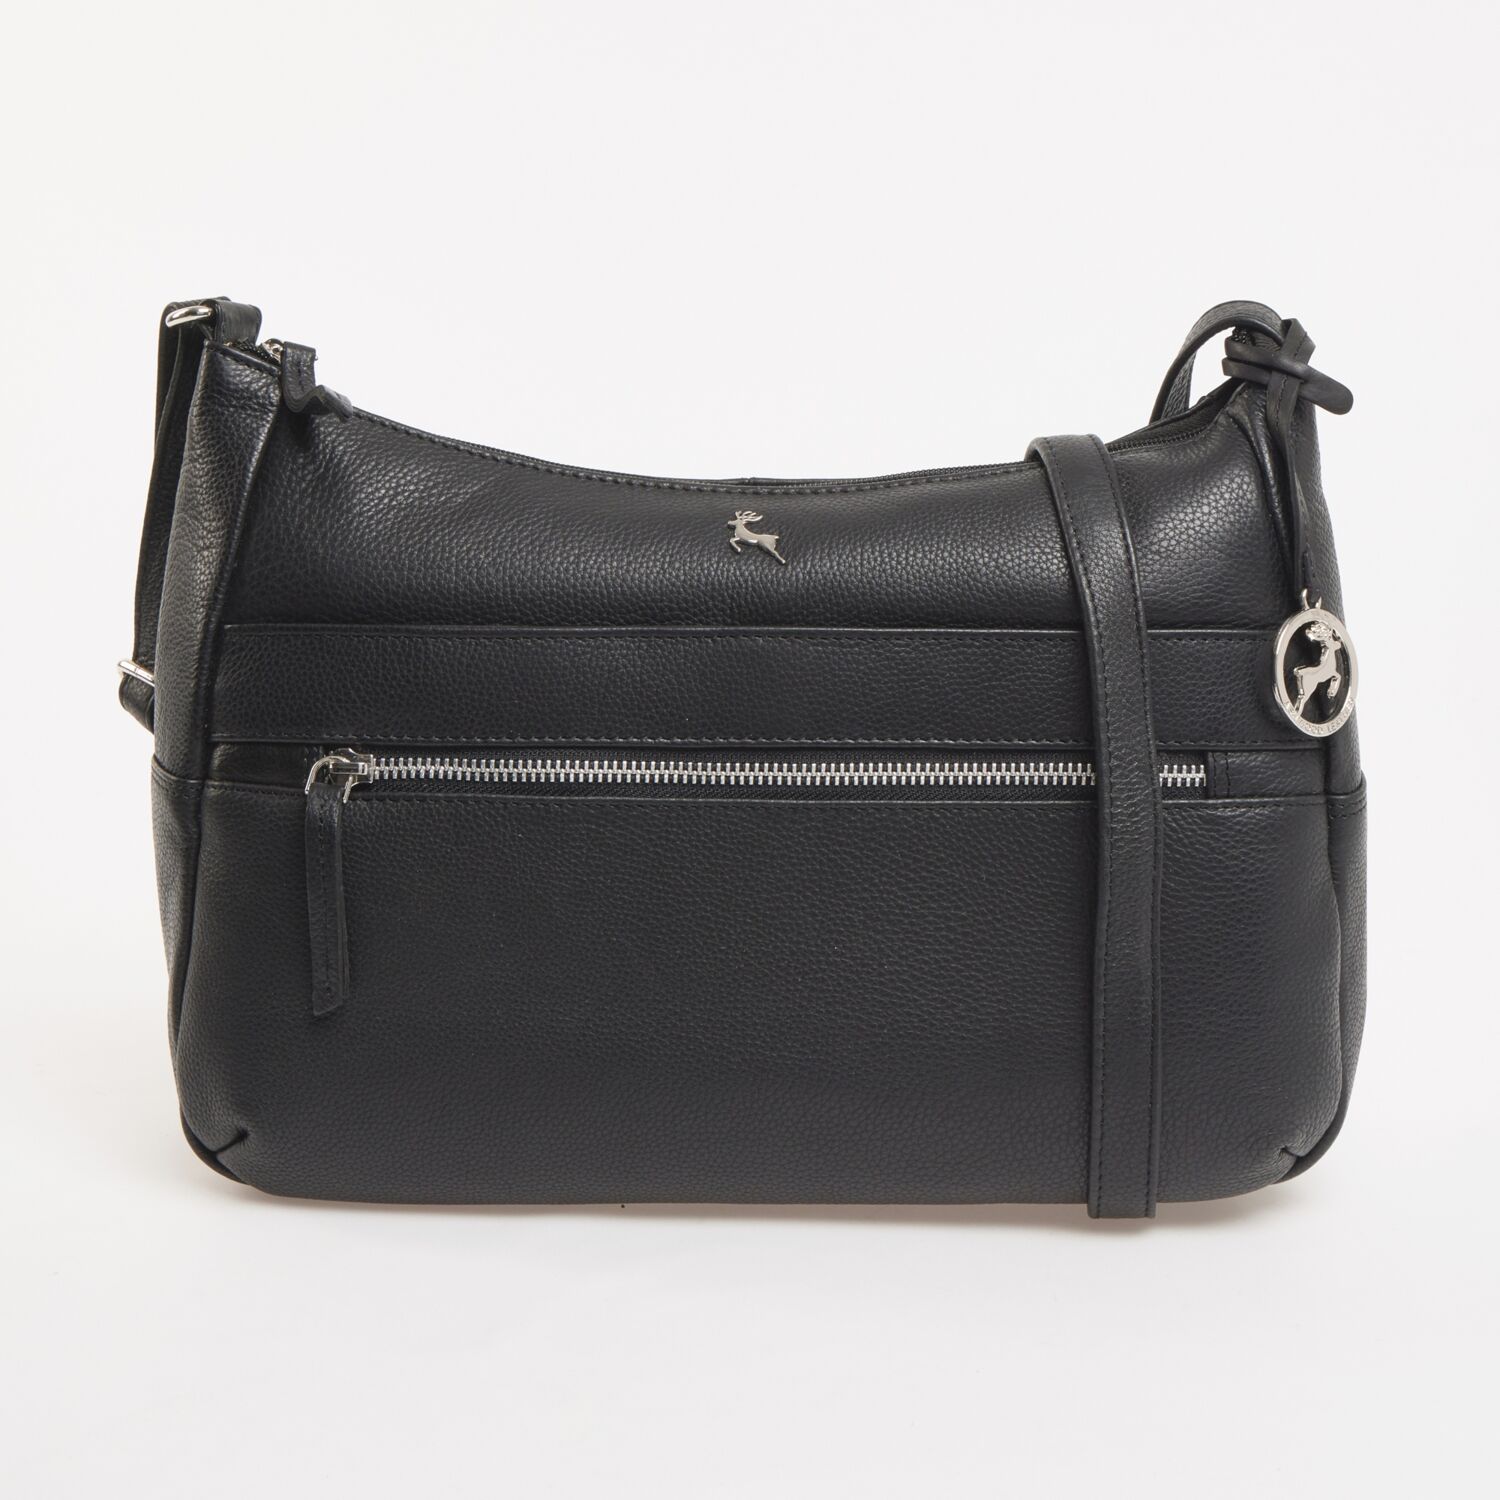 Black Leather Camera Bag - TK Maxx UK